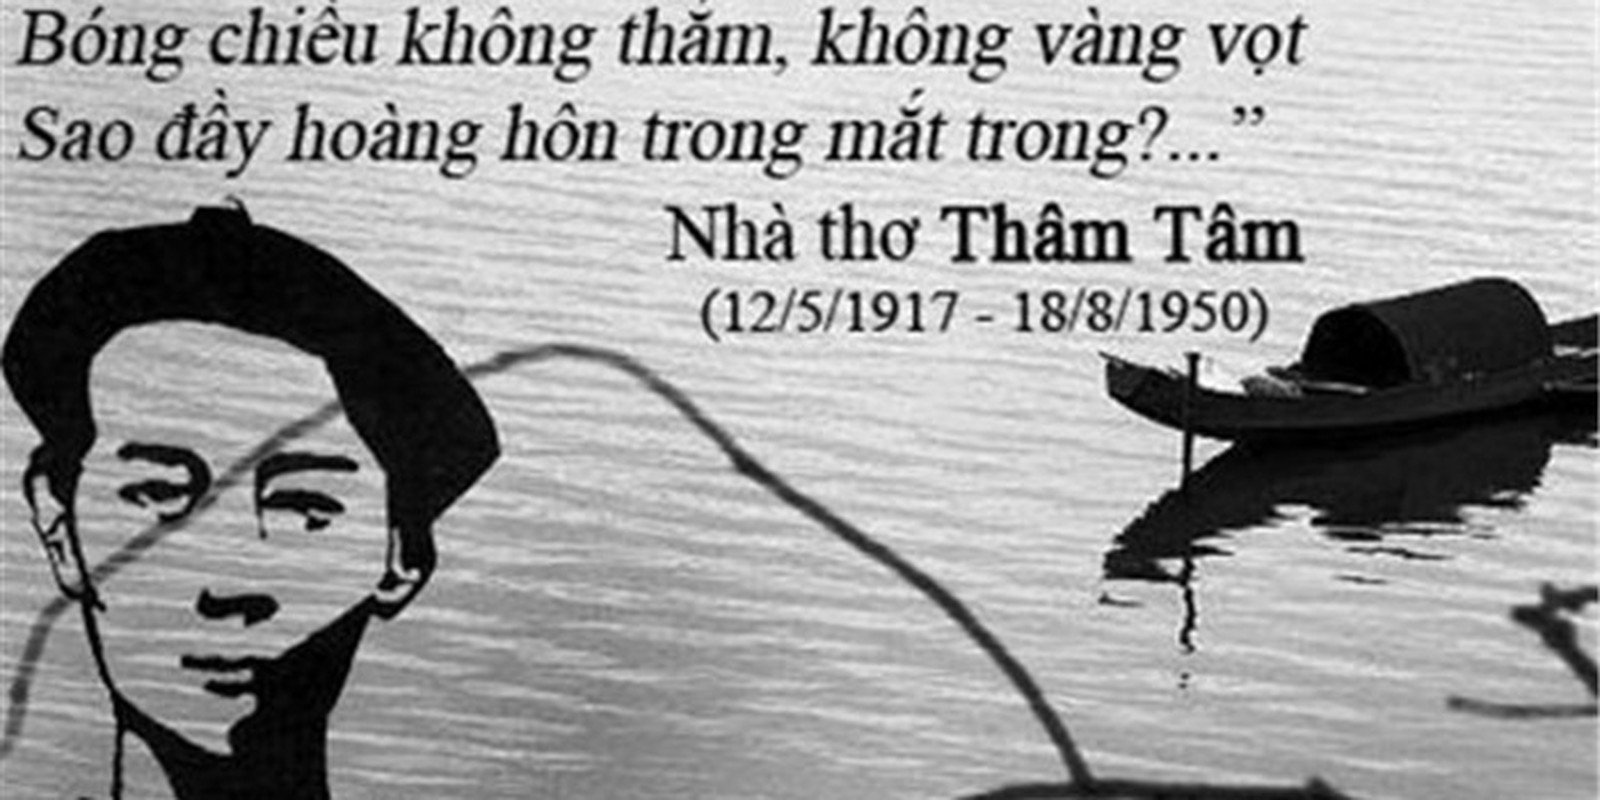 Nhung “an so” trong Tong biet hanh cua nha tho Tham Tam-Hinh-2